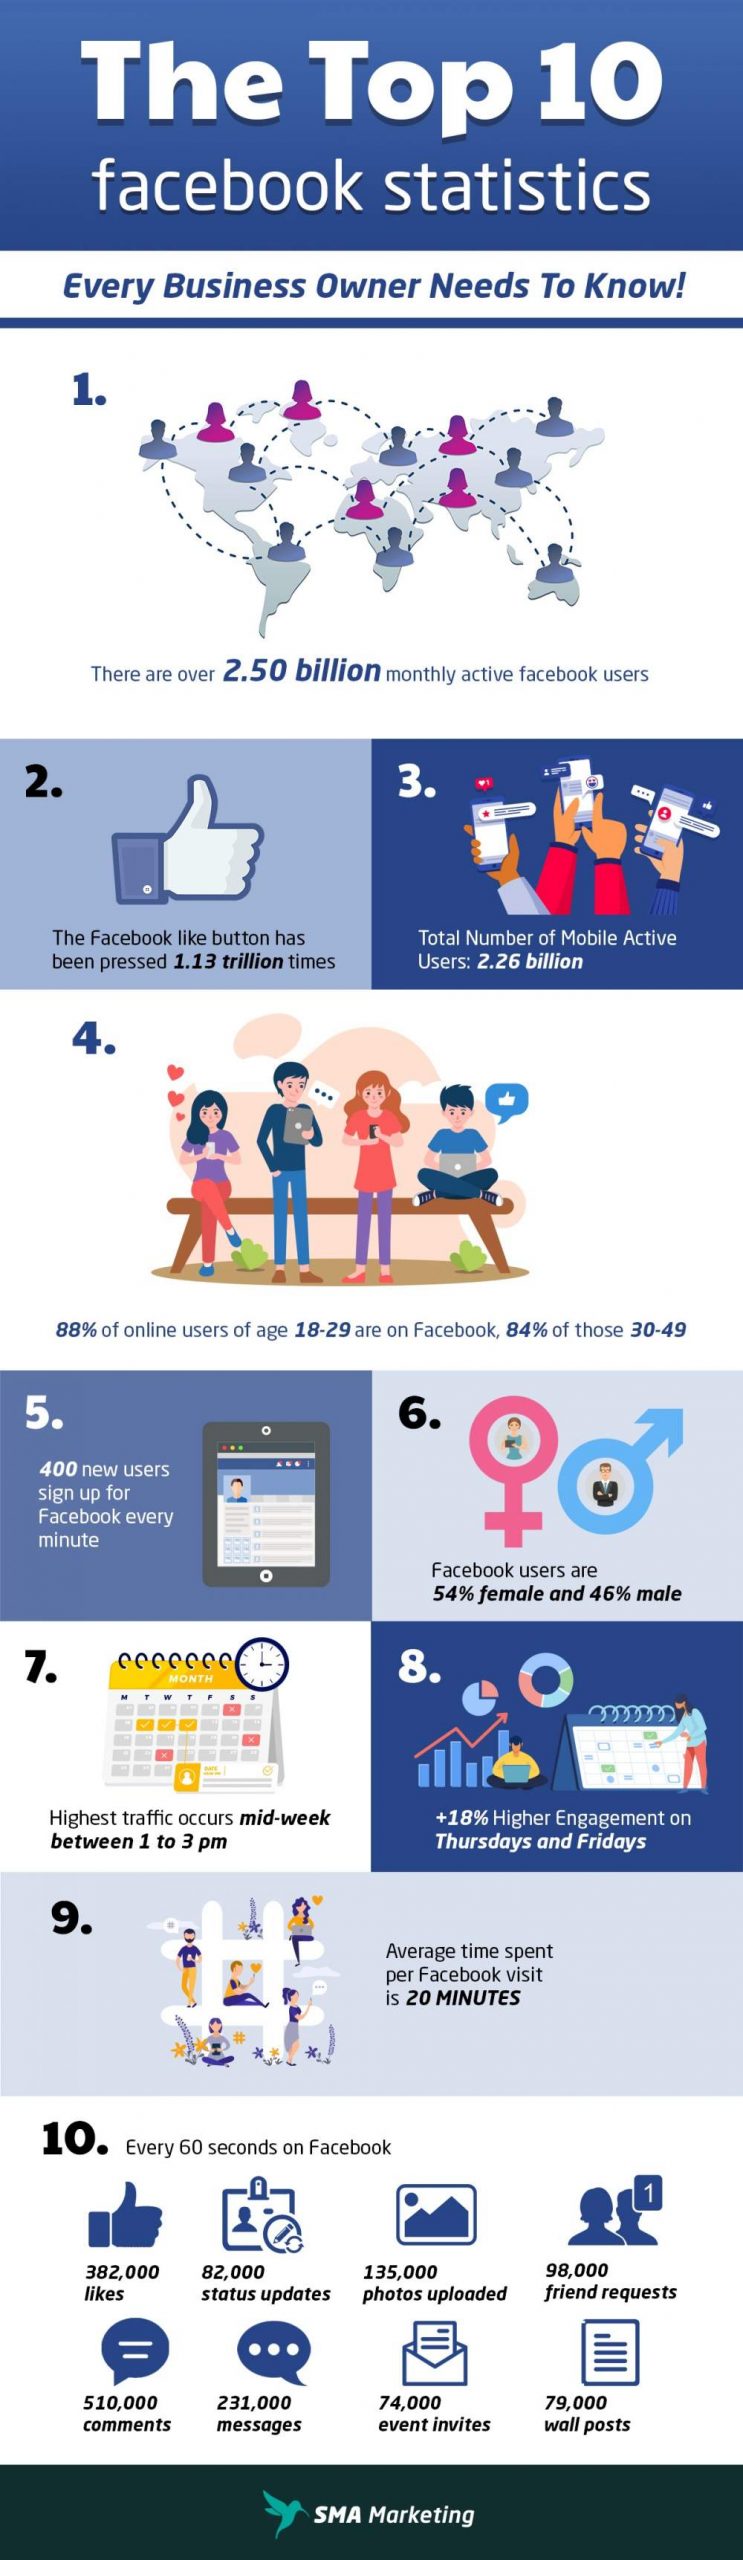 Top 10 Facebook Statistics